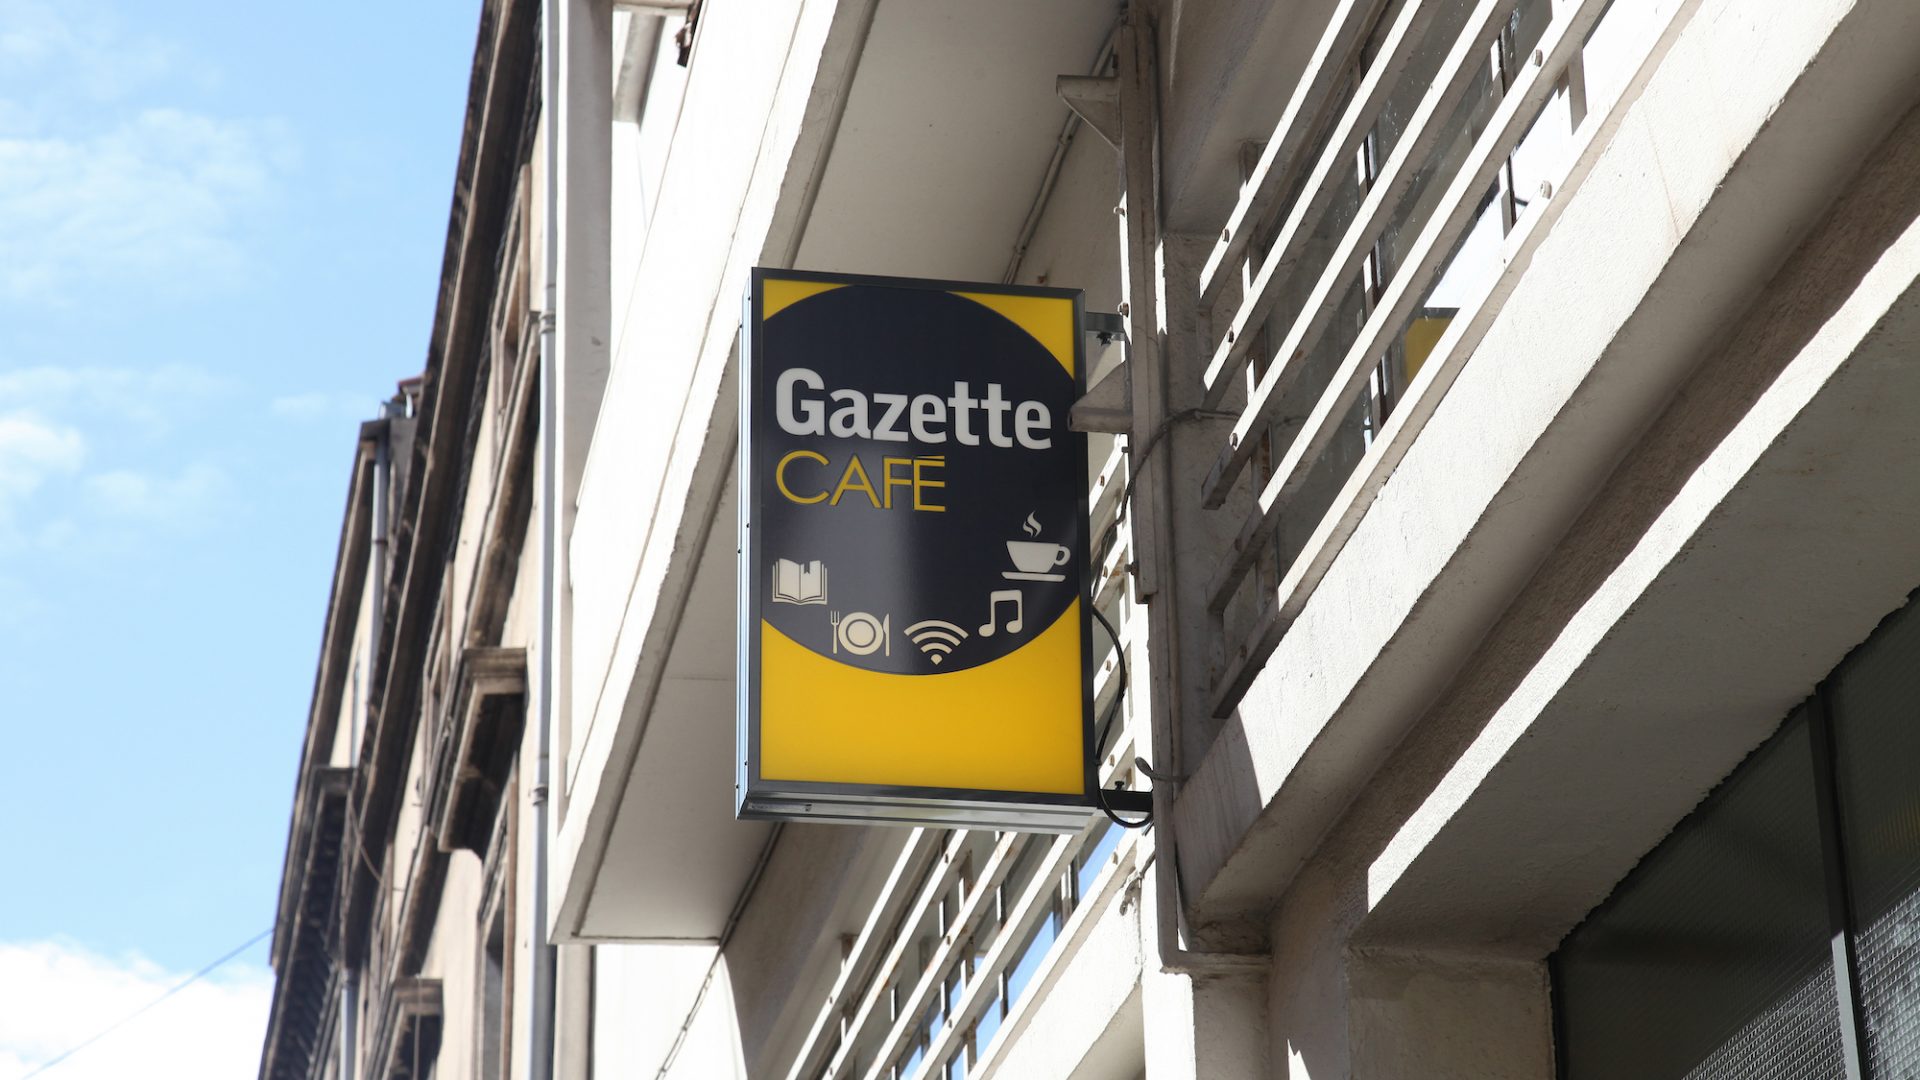 Gazette cafe2 1920x1080